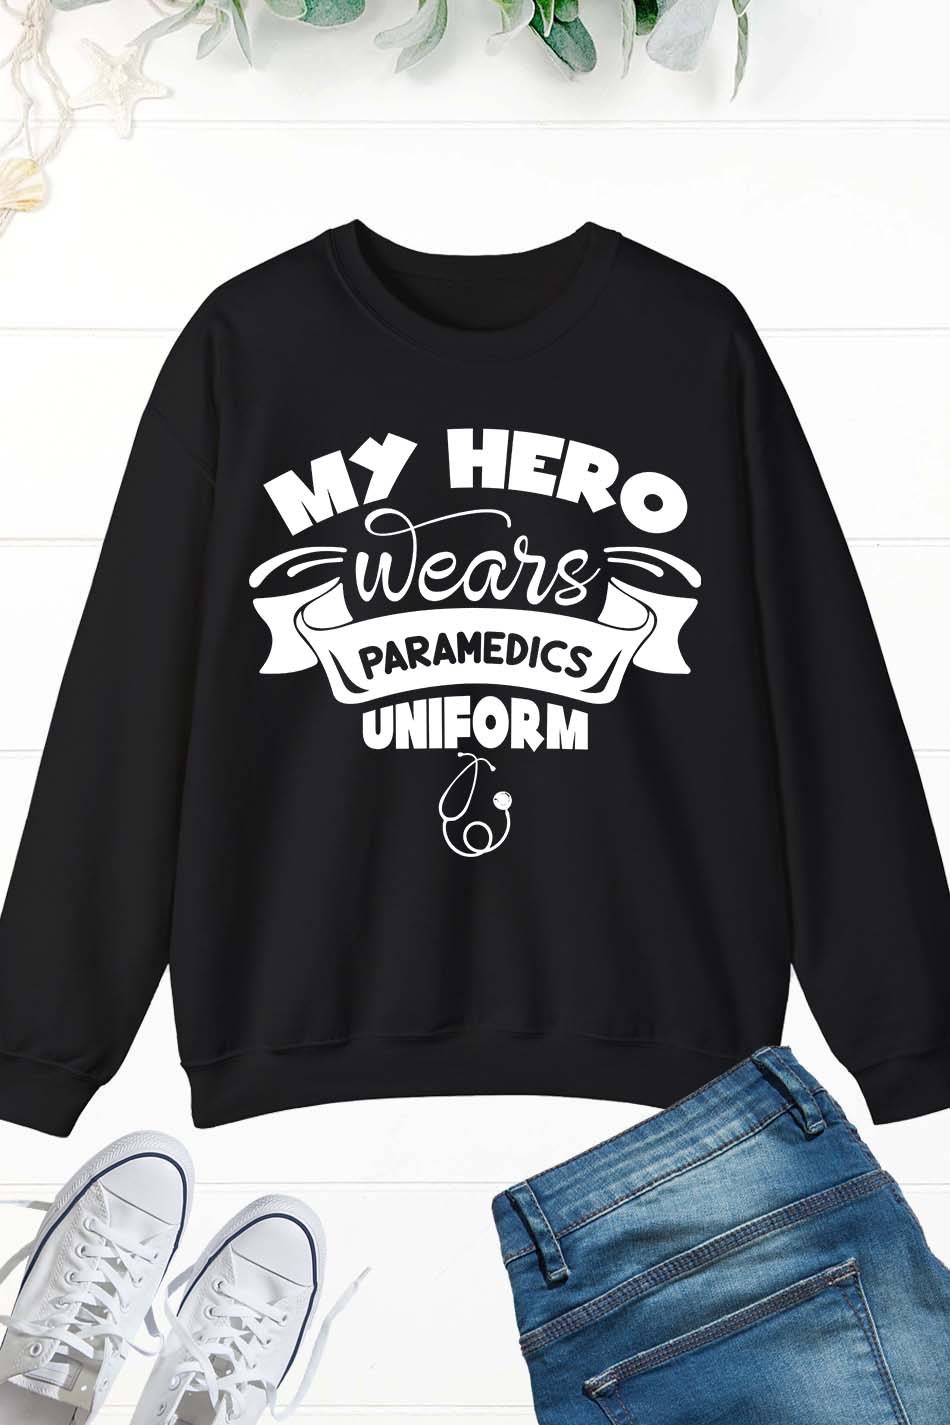 My Hero Wears Paramedics Sweatshirt